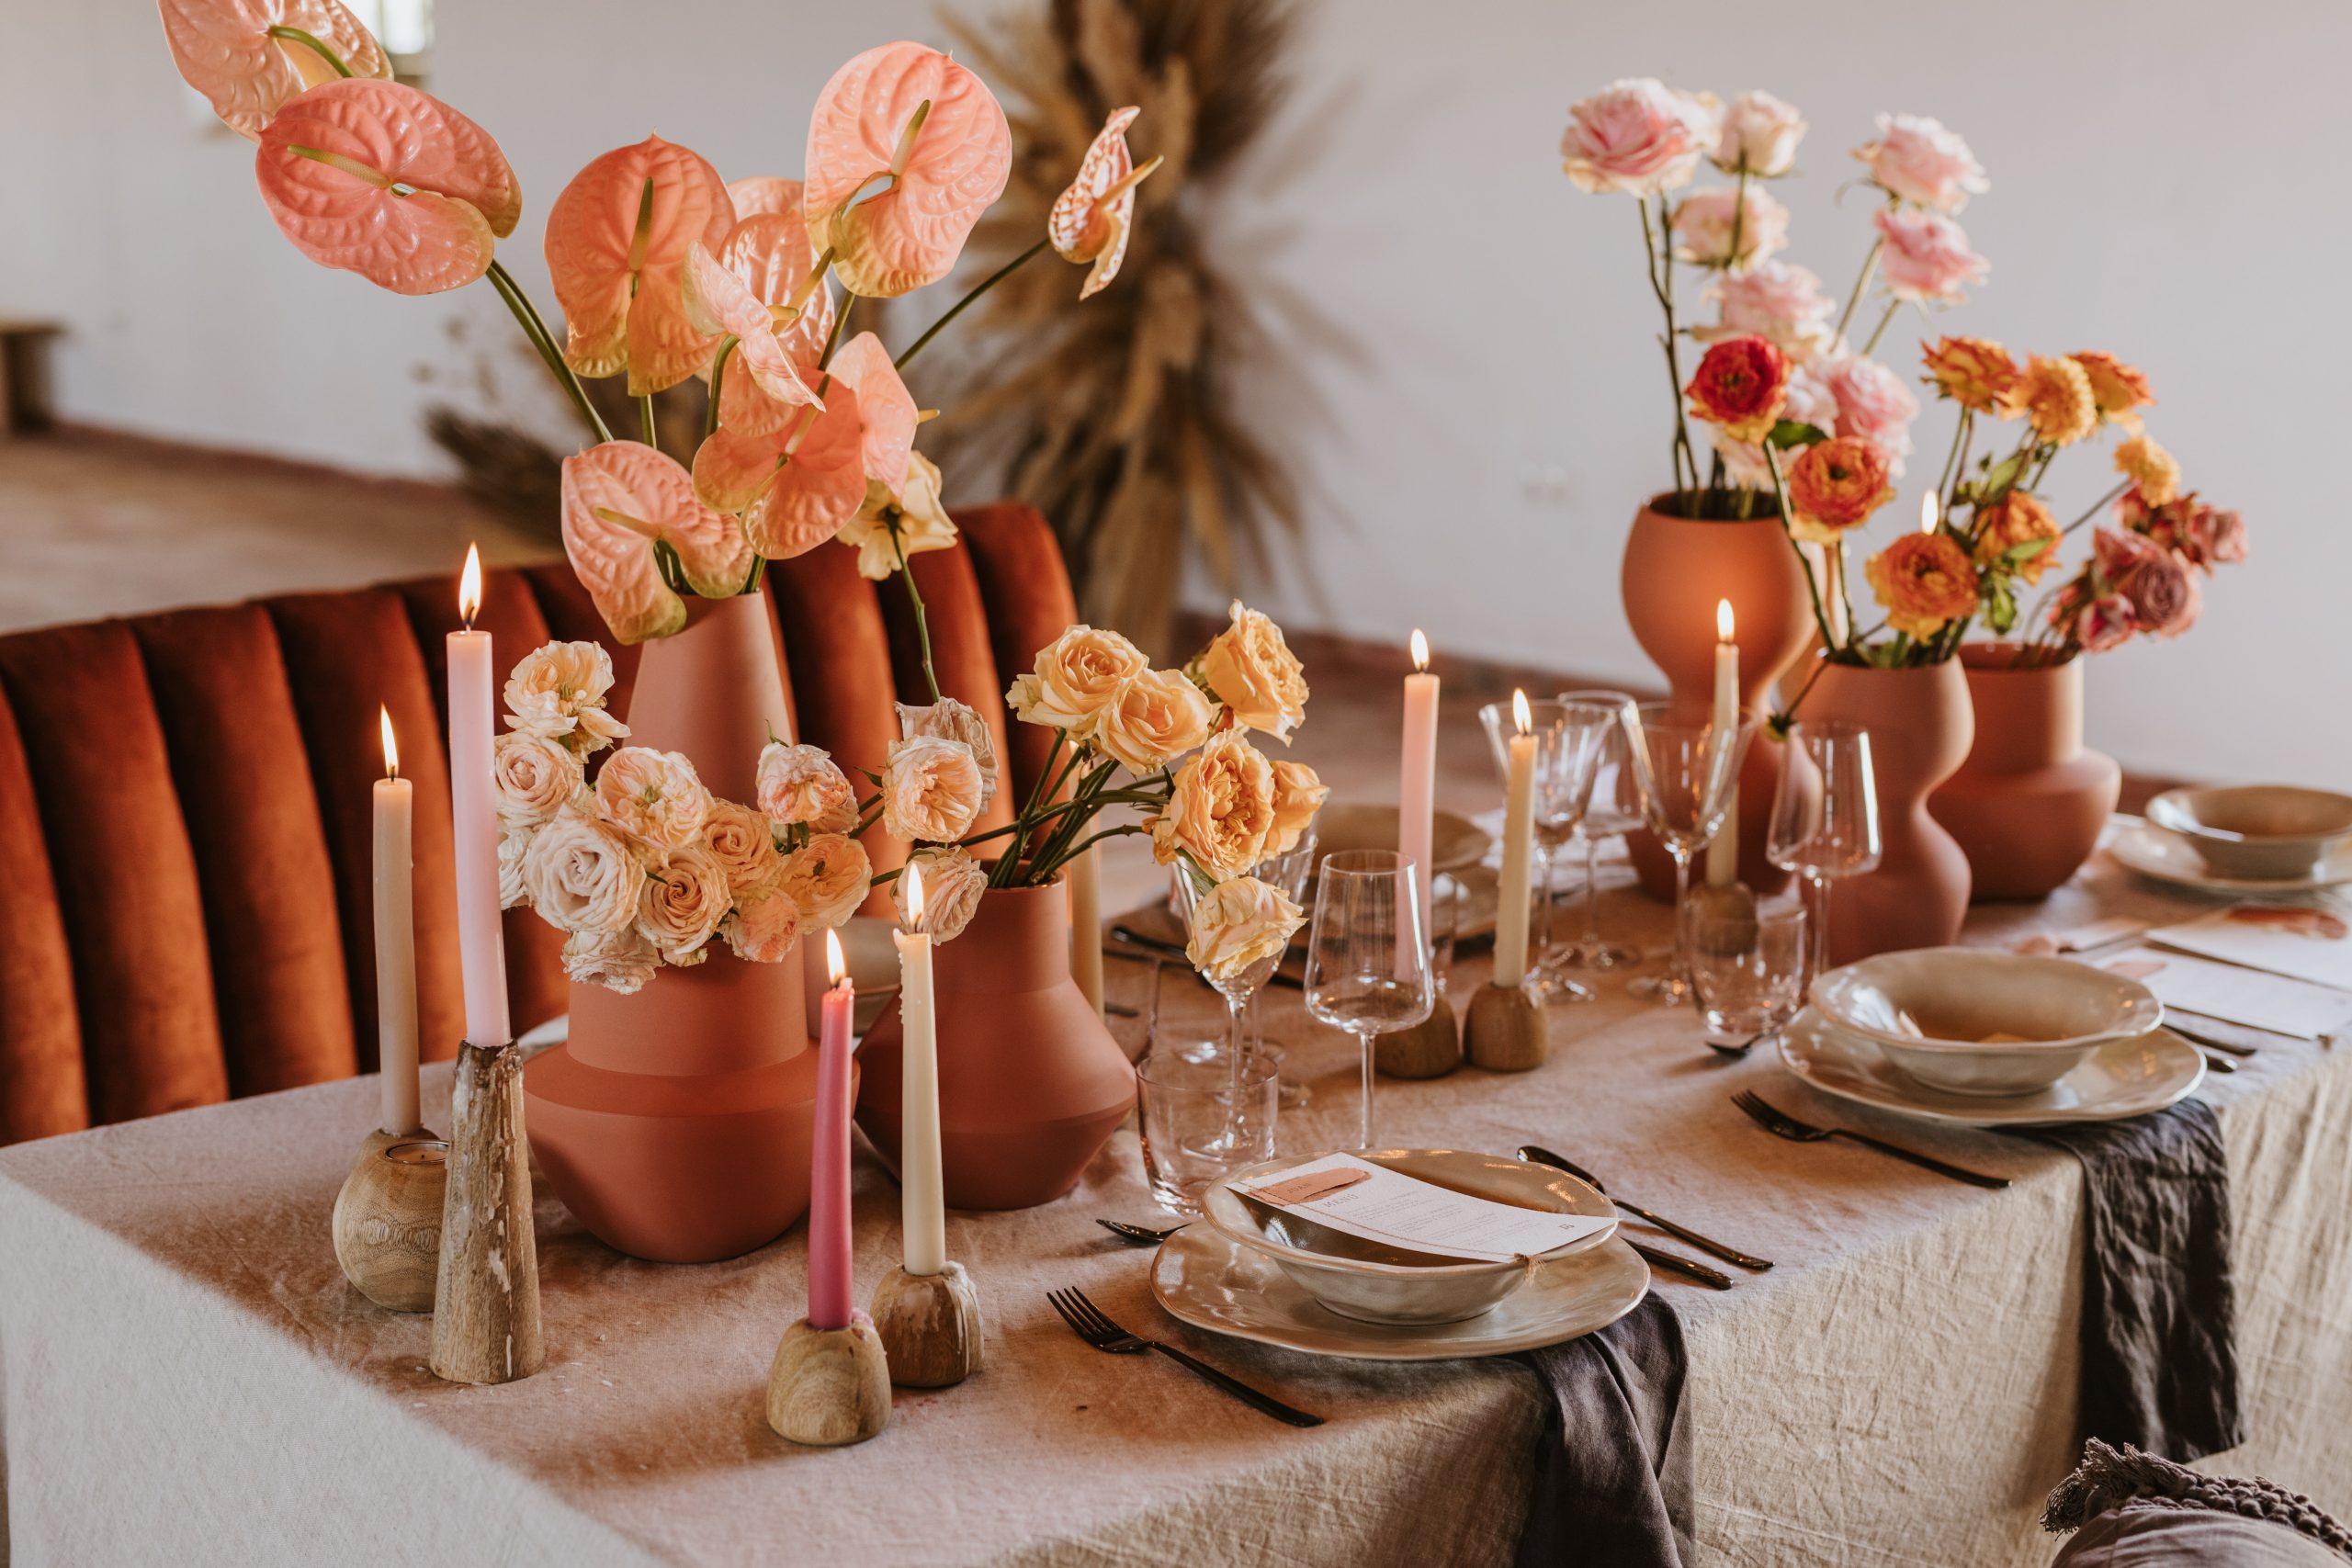 Como crear tu editorial de boda - Decoración de mesa - decoración floral